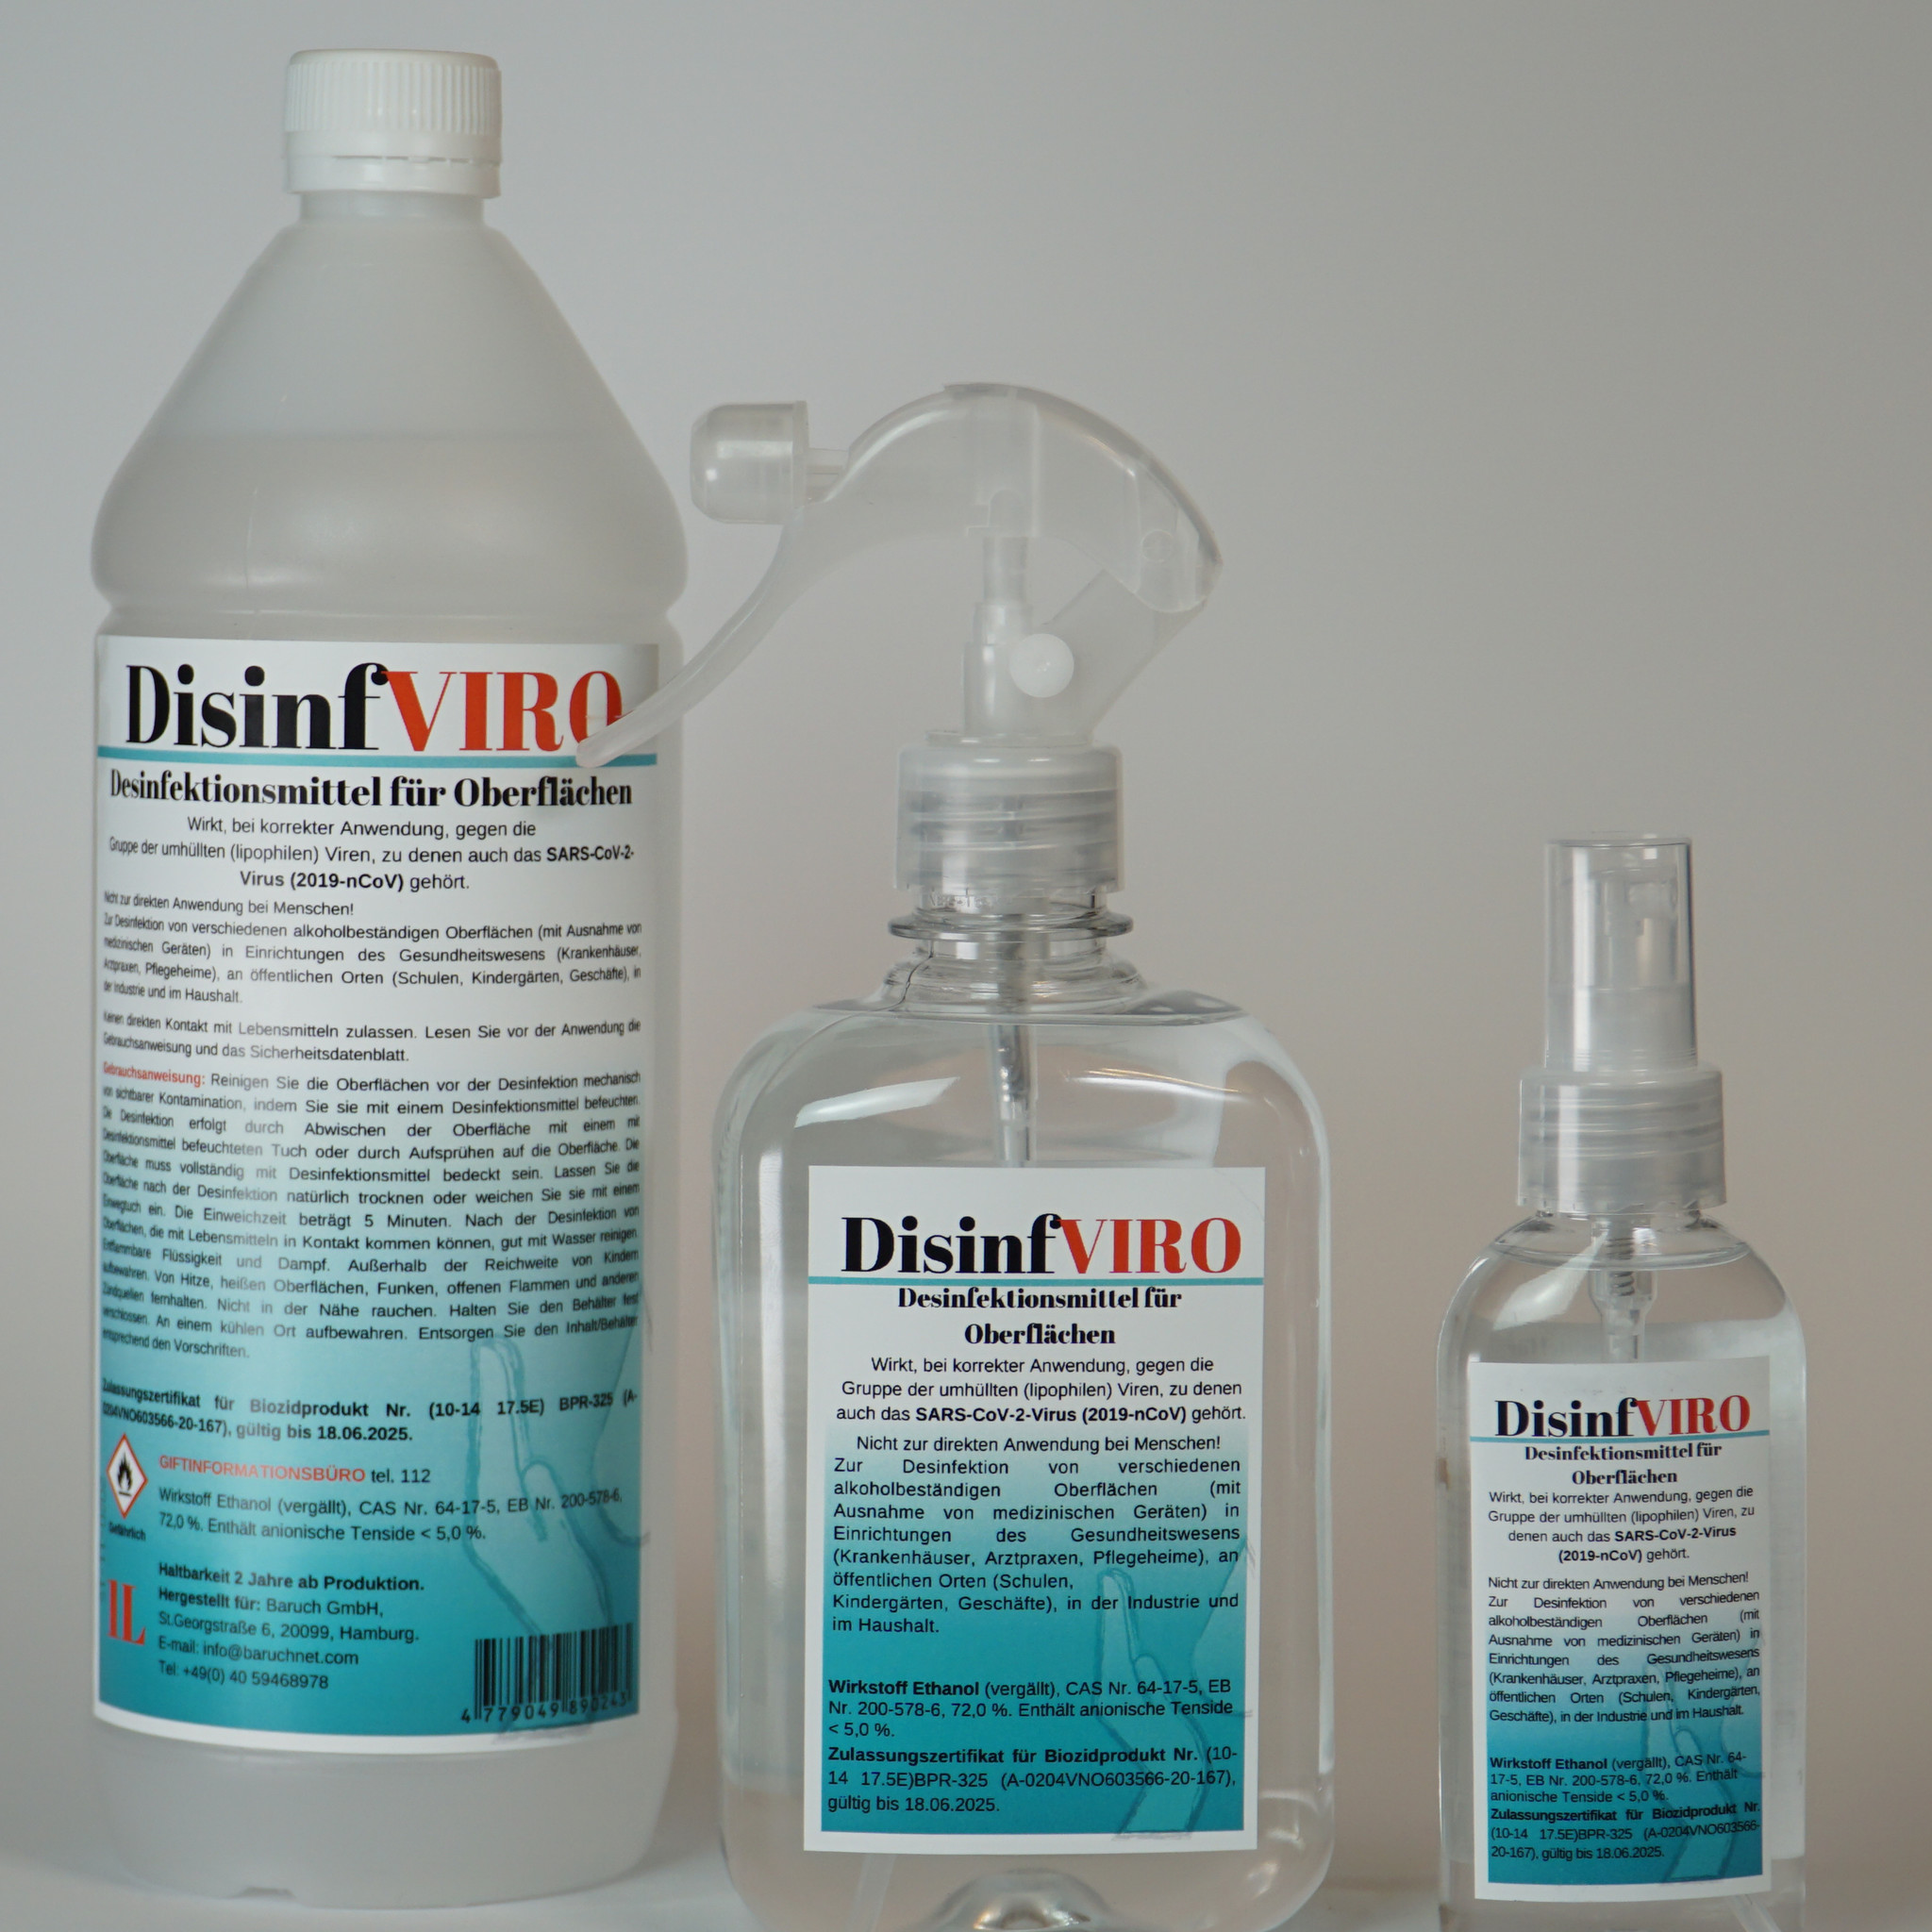 DisinfVIRO Desinfektionsmittel für Oberflächen